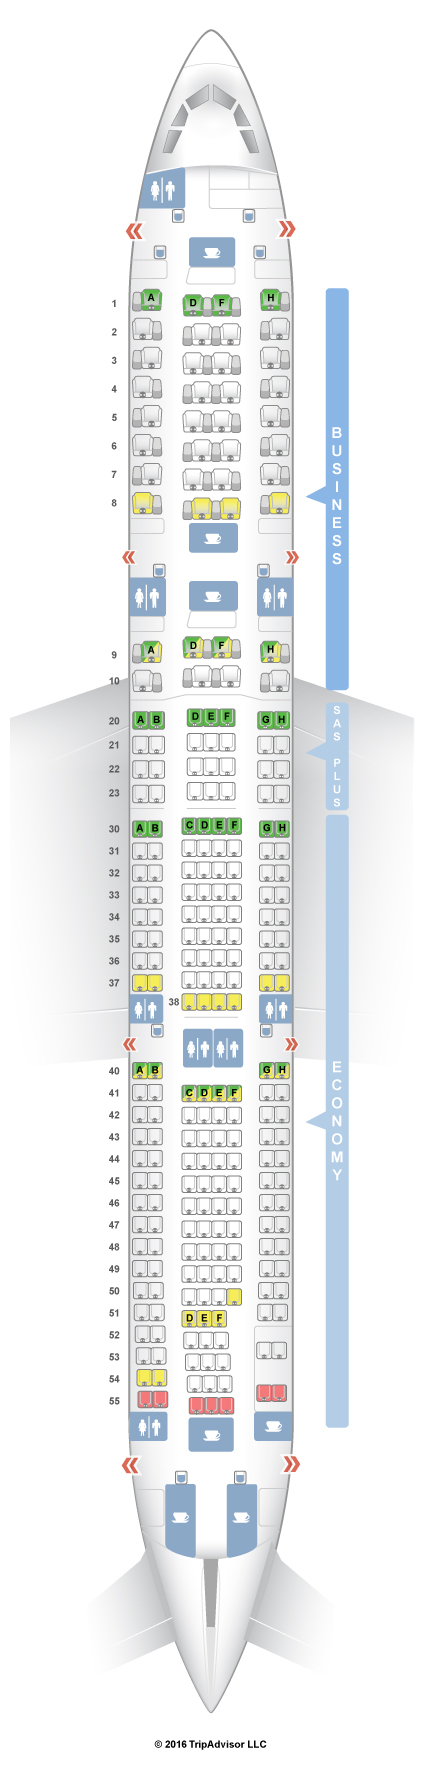 Norwegian Airlines Seating Chart